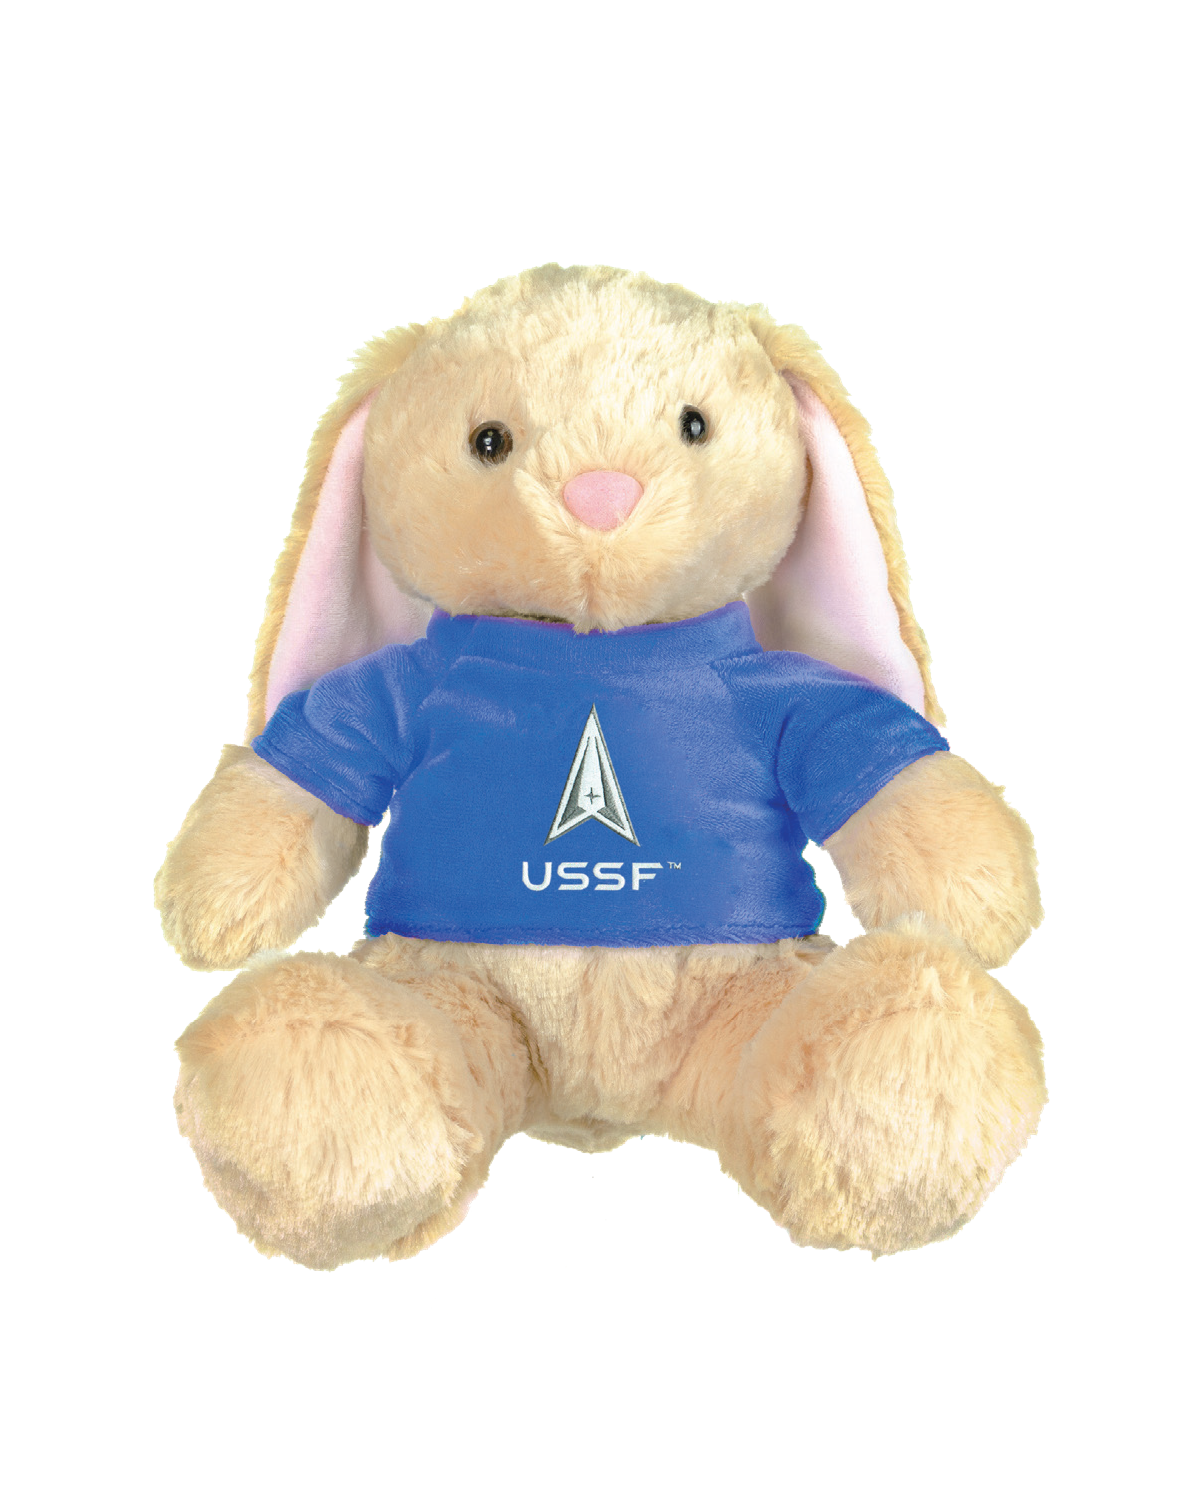 U.S. Space Force on Stuffed Plush Bunny Rabbit